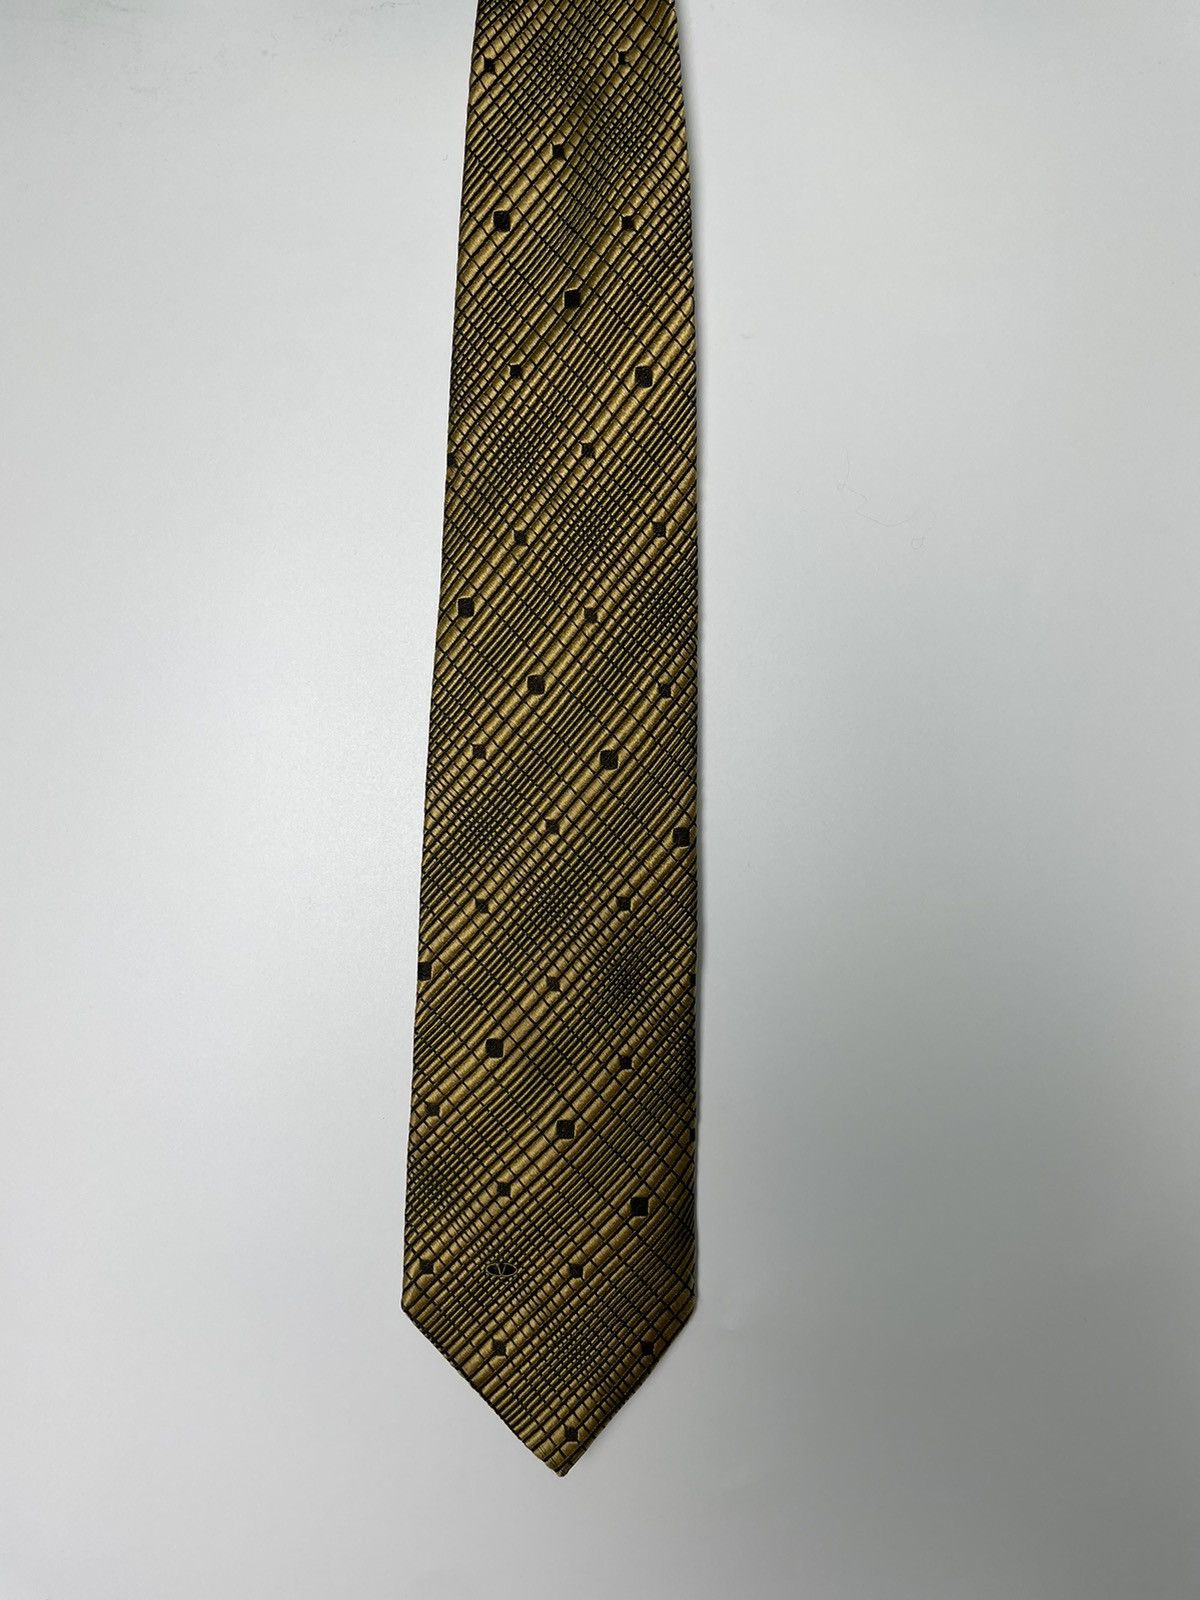 Valentino Valentino italy tie cravatte made in italy | Grailed